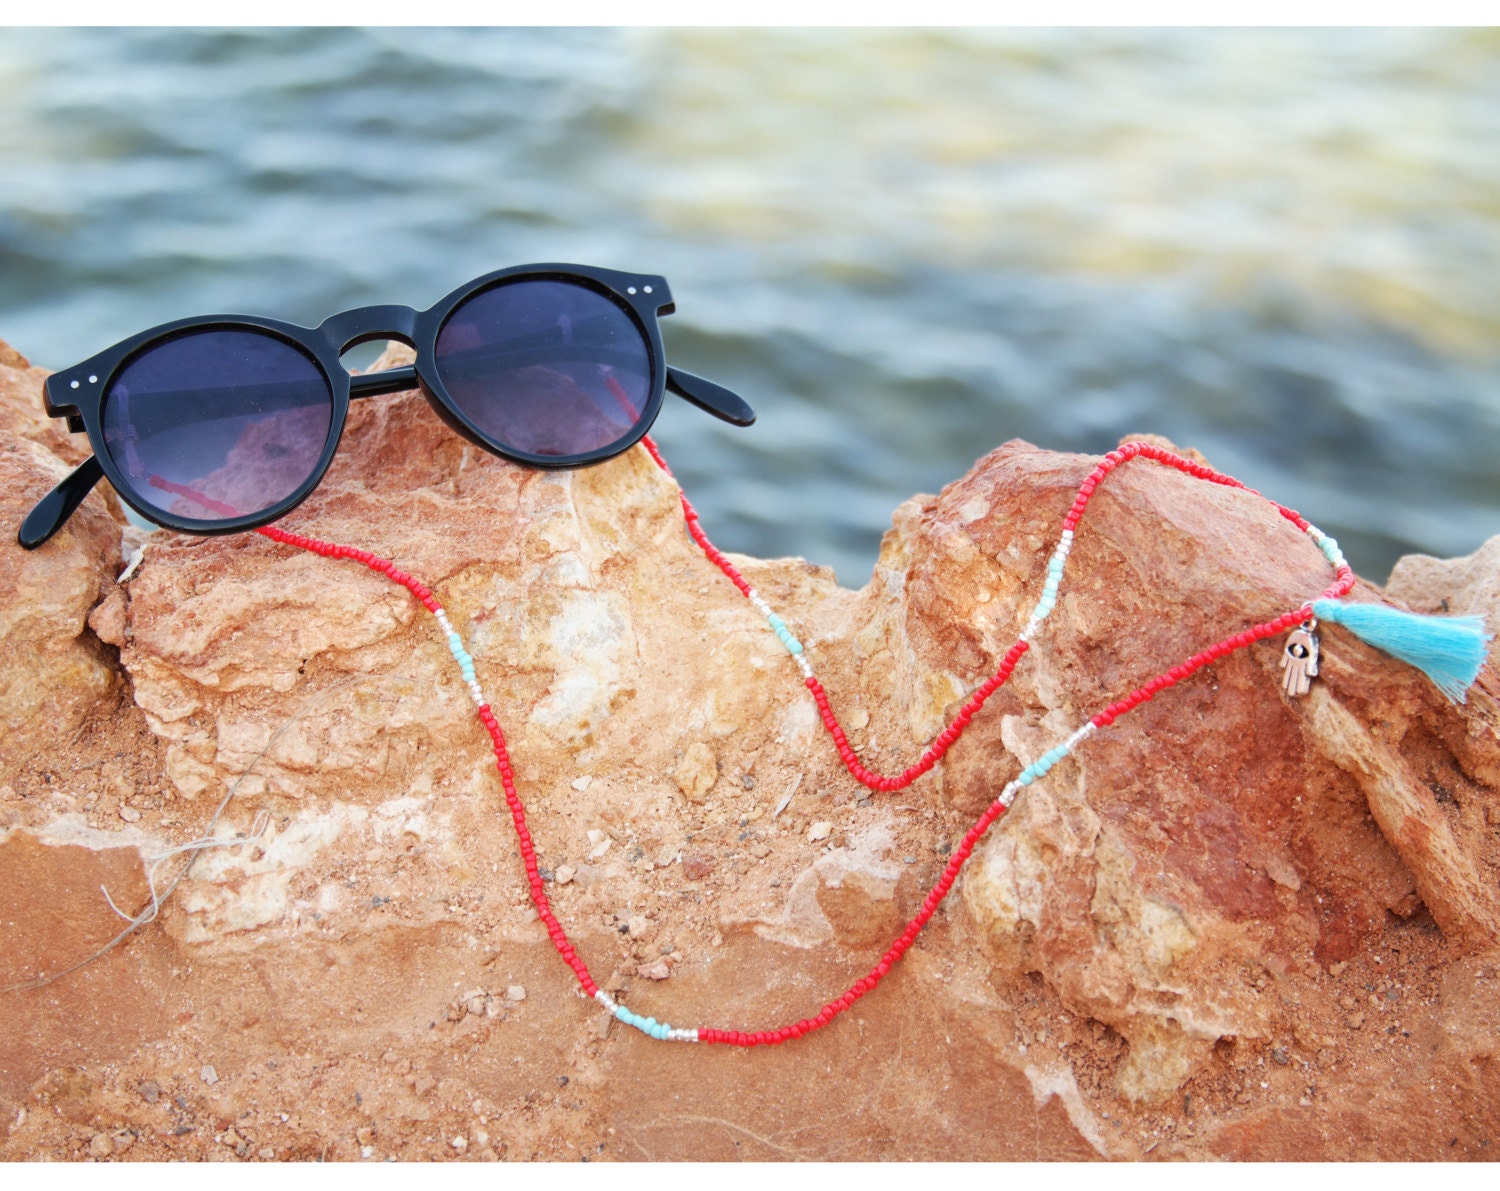 Serpentine Beaded Eyeglass Holder - Turquoise – Handmade by Friendship  Bridge®